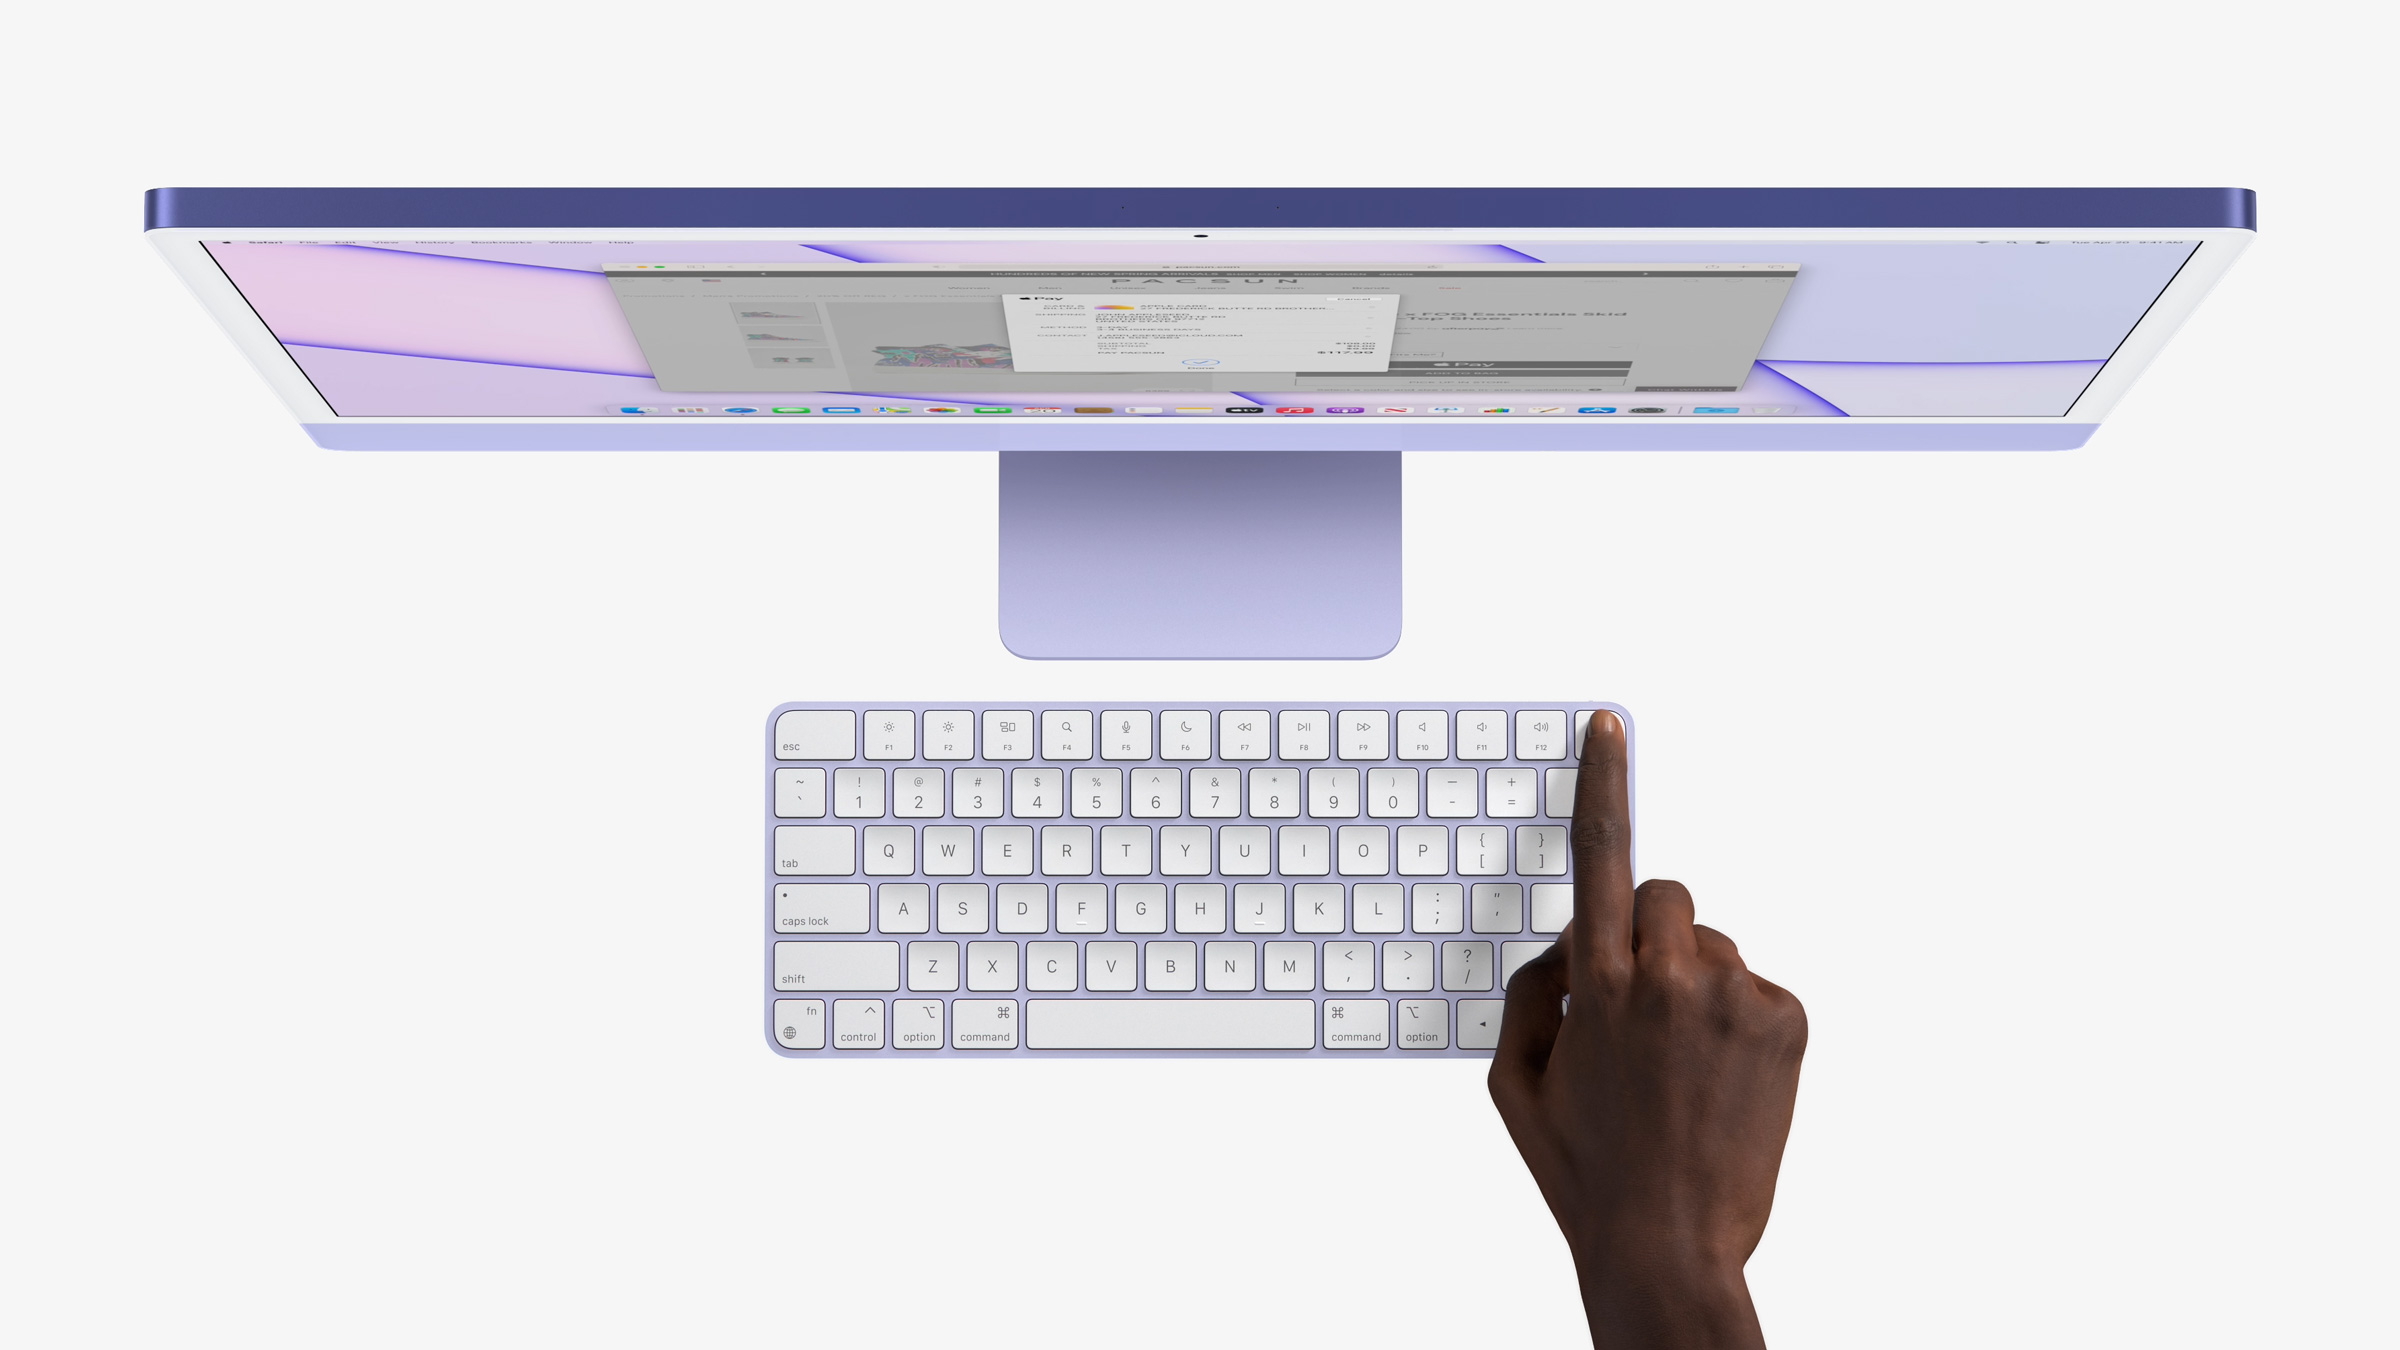 iMac 2021 colors: Purple